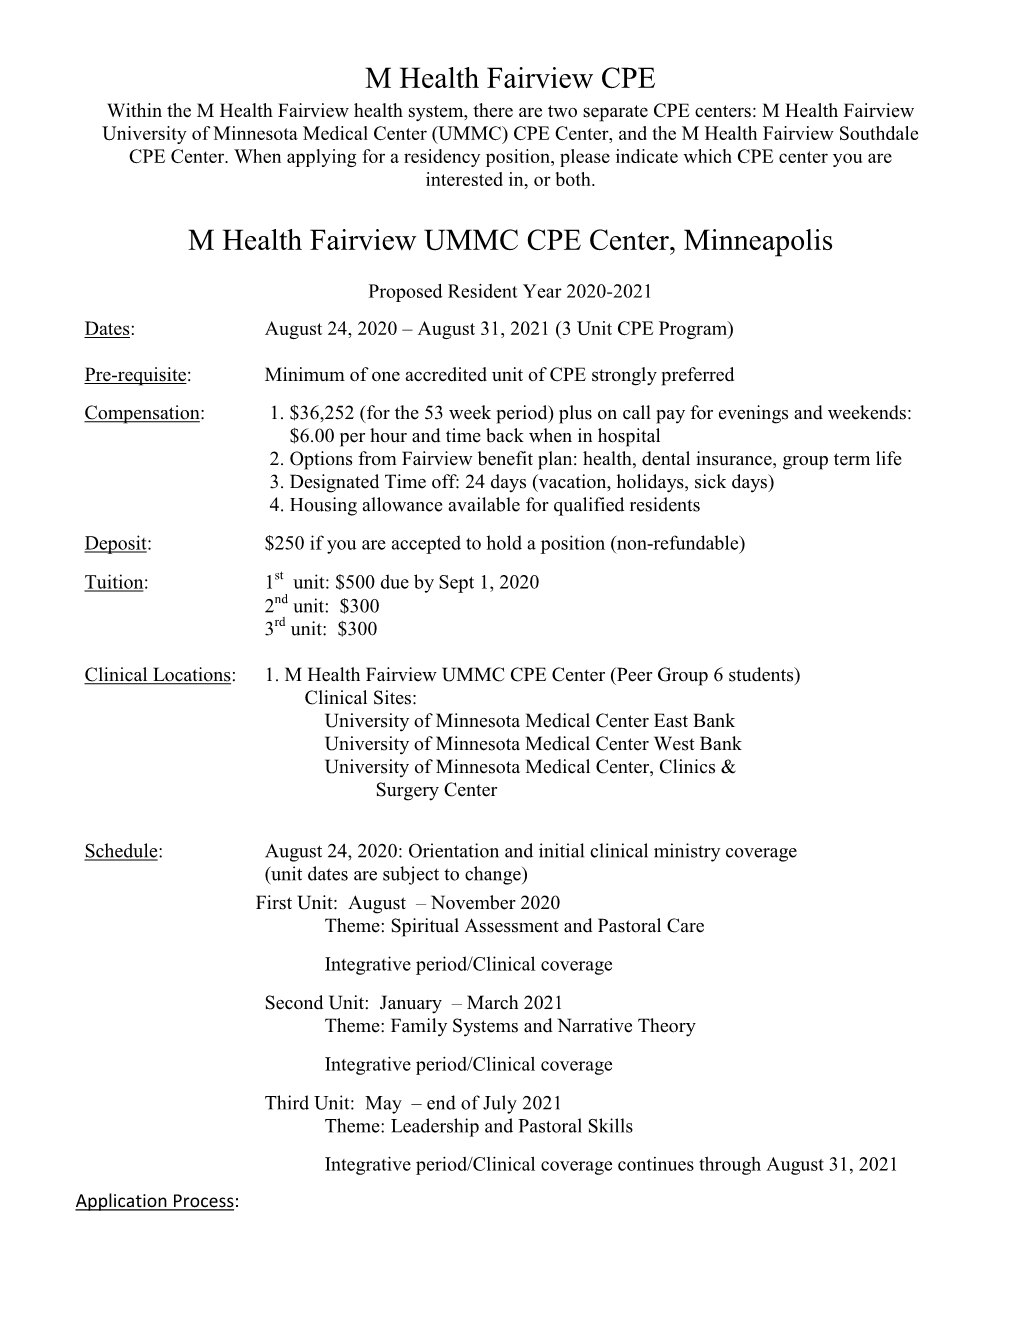 M Health Fairview CPE M Health Fairview UMMC CPE Center